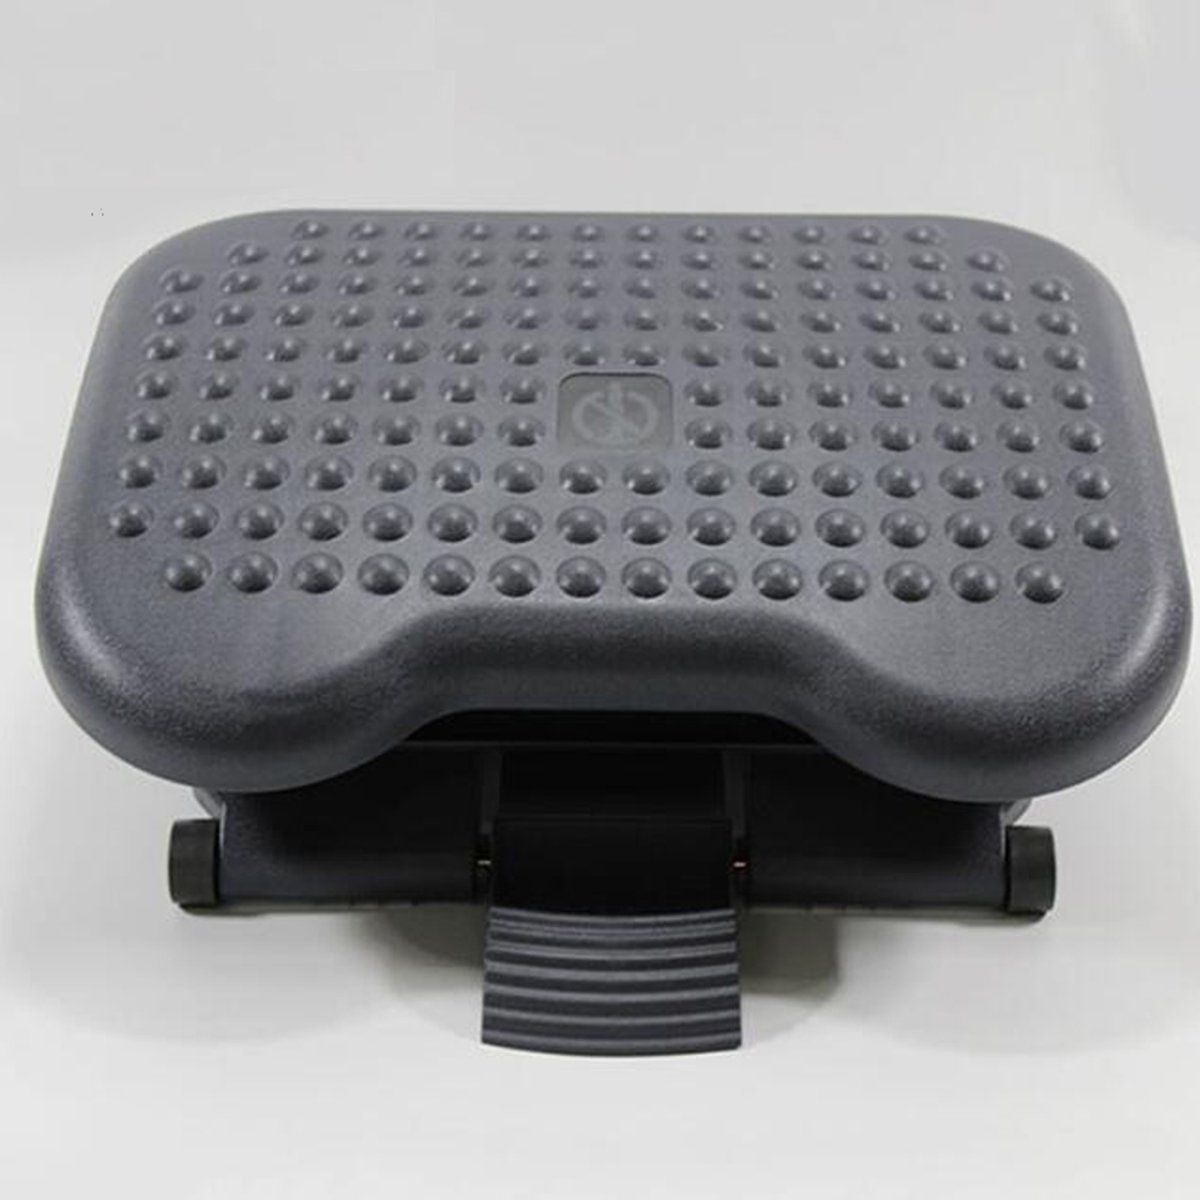 Adjustable Tilting Footrest Under Desk Ergonomic Office Foot Rest Pad Footstool Foot Pegs 7